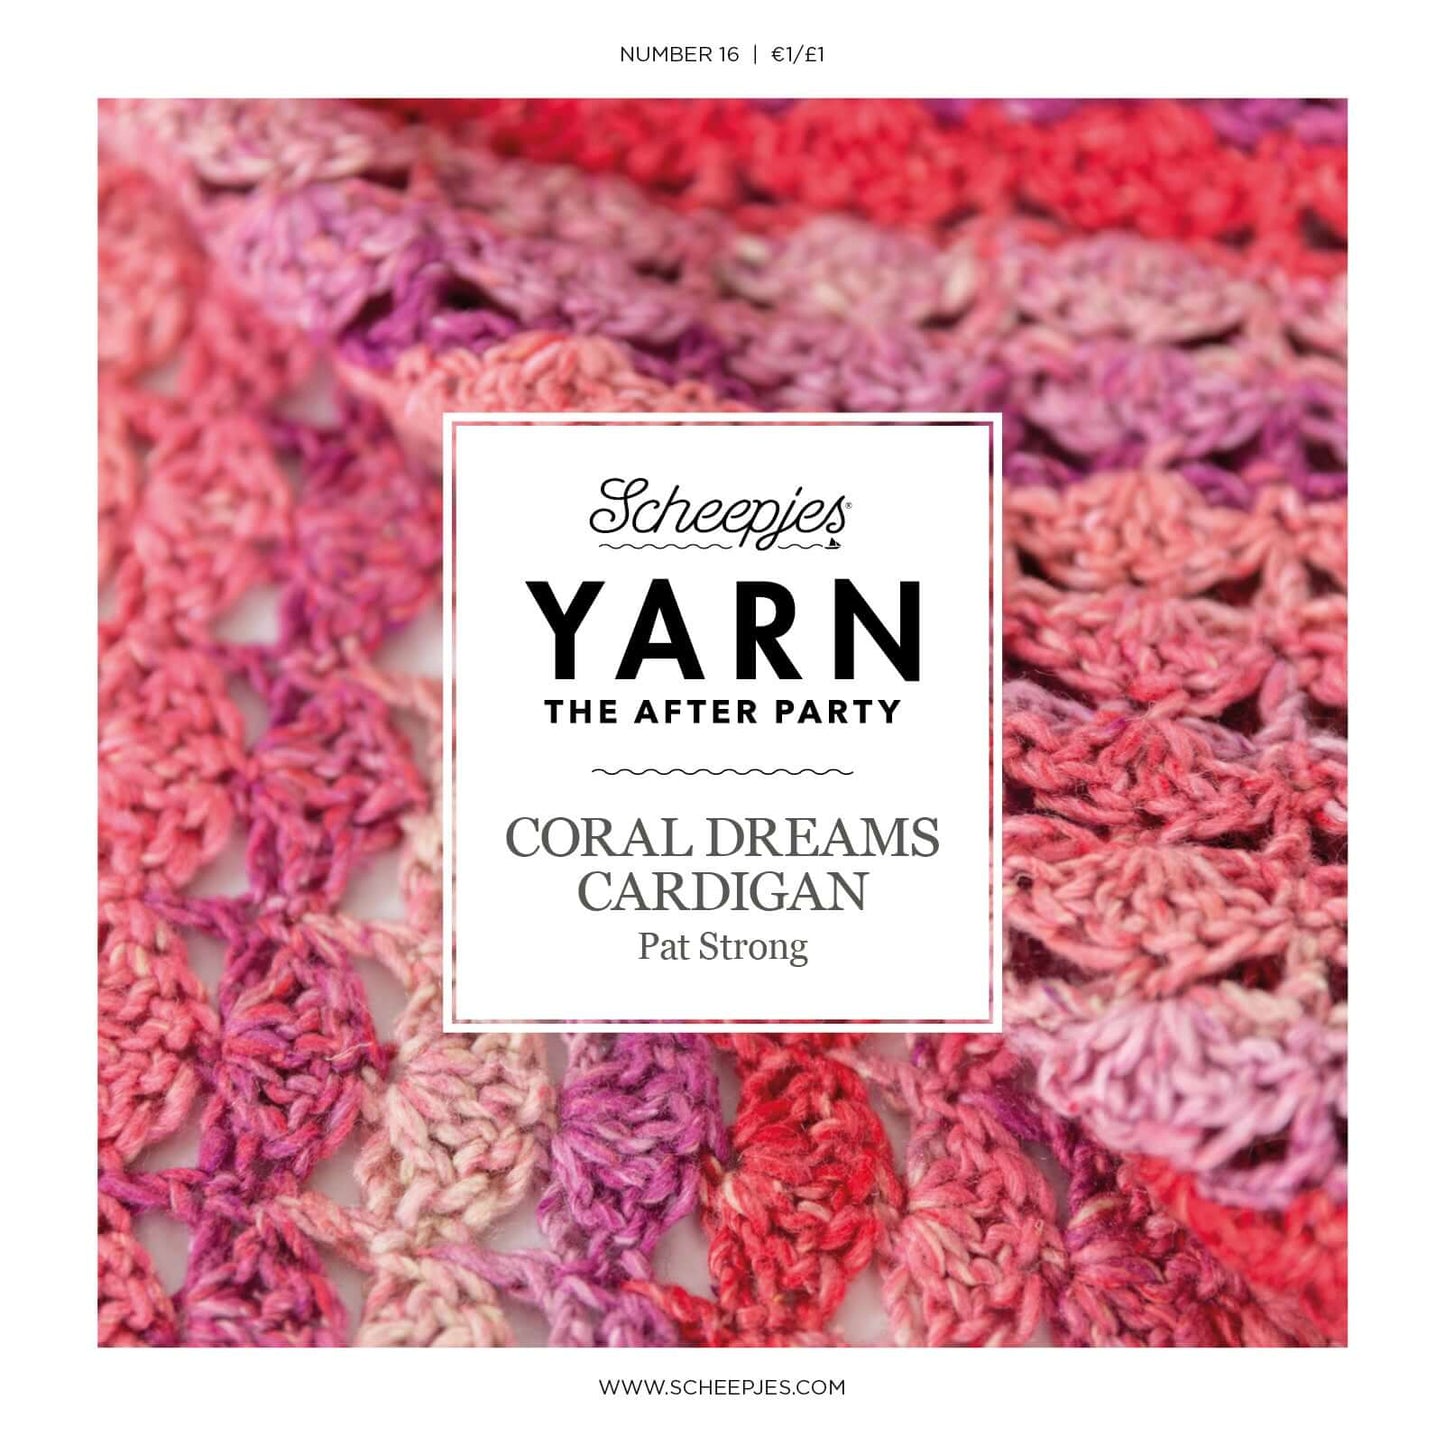 Scheepjes Yarn The After Party no. 16 - Coral Dreams Cardigan (booklet) - (Crochet)